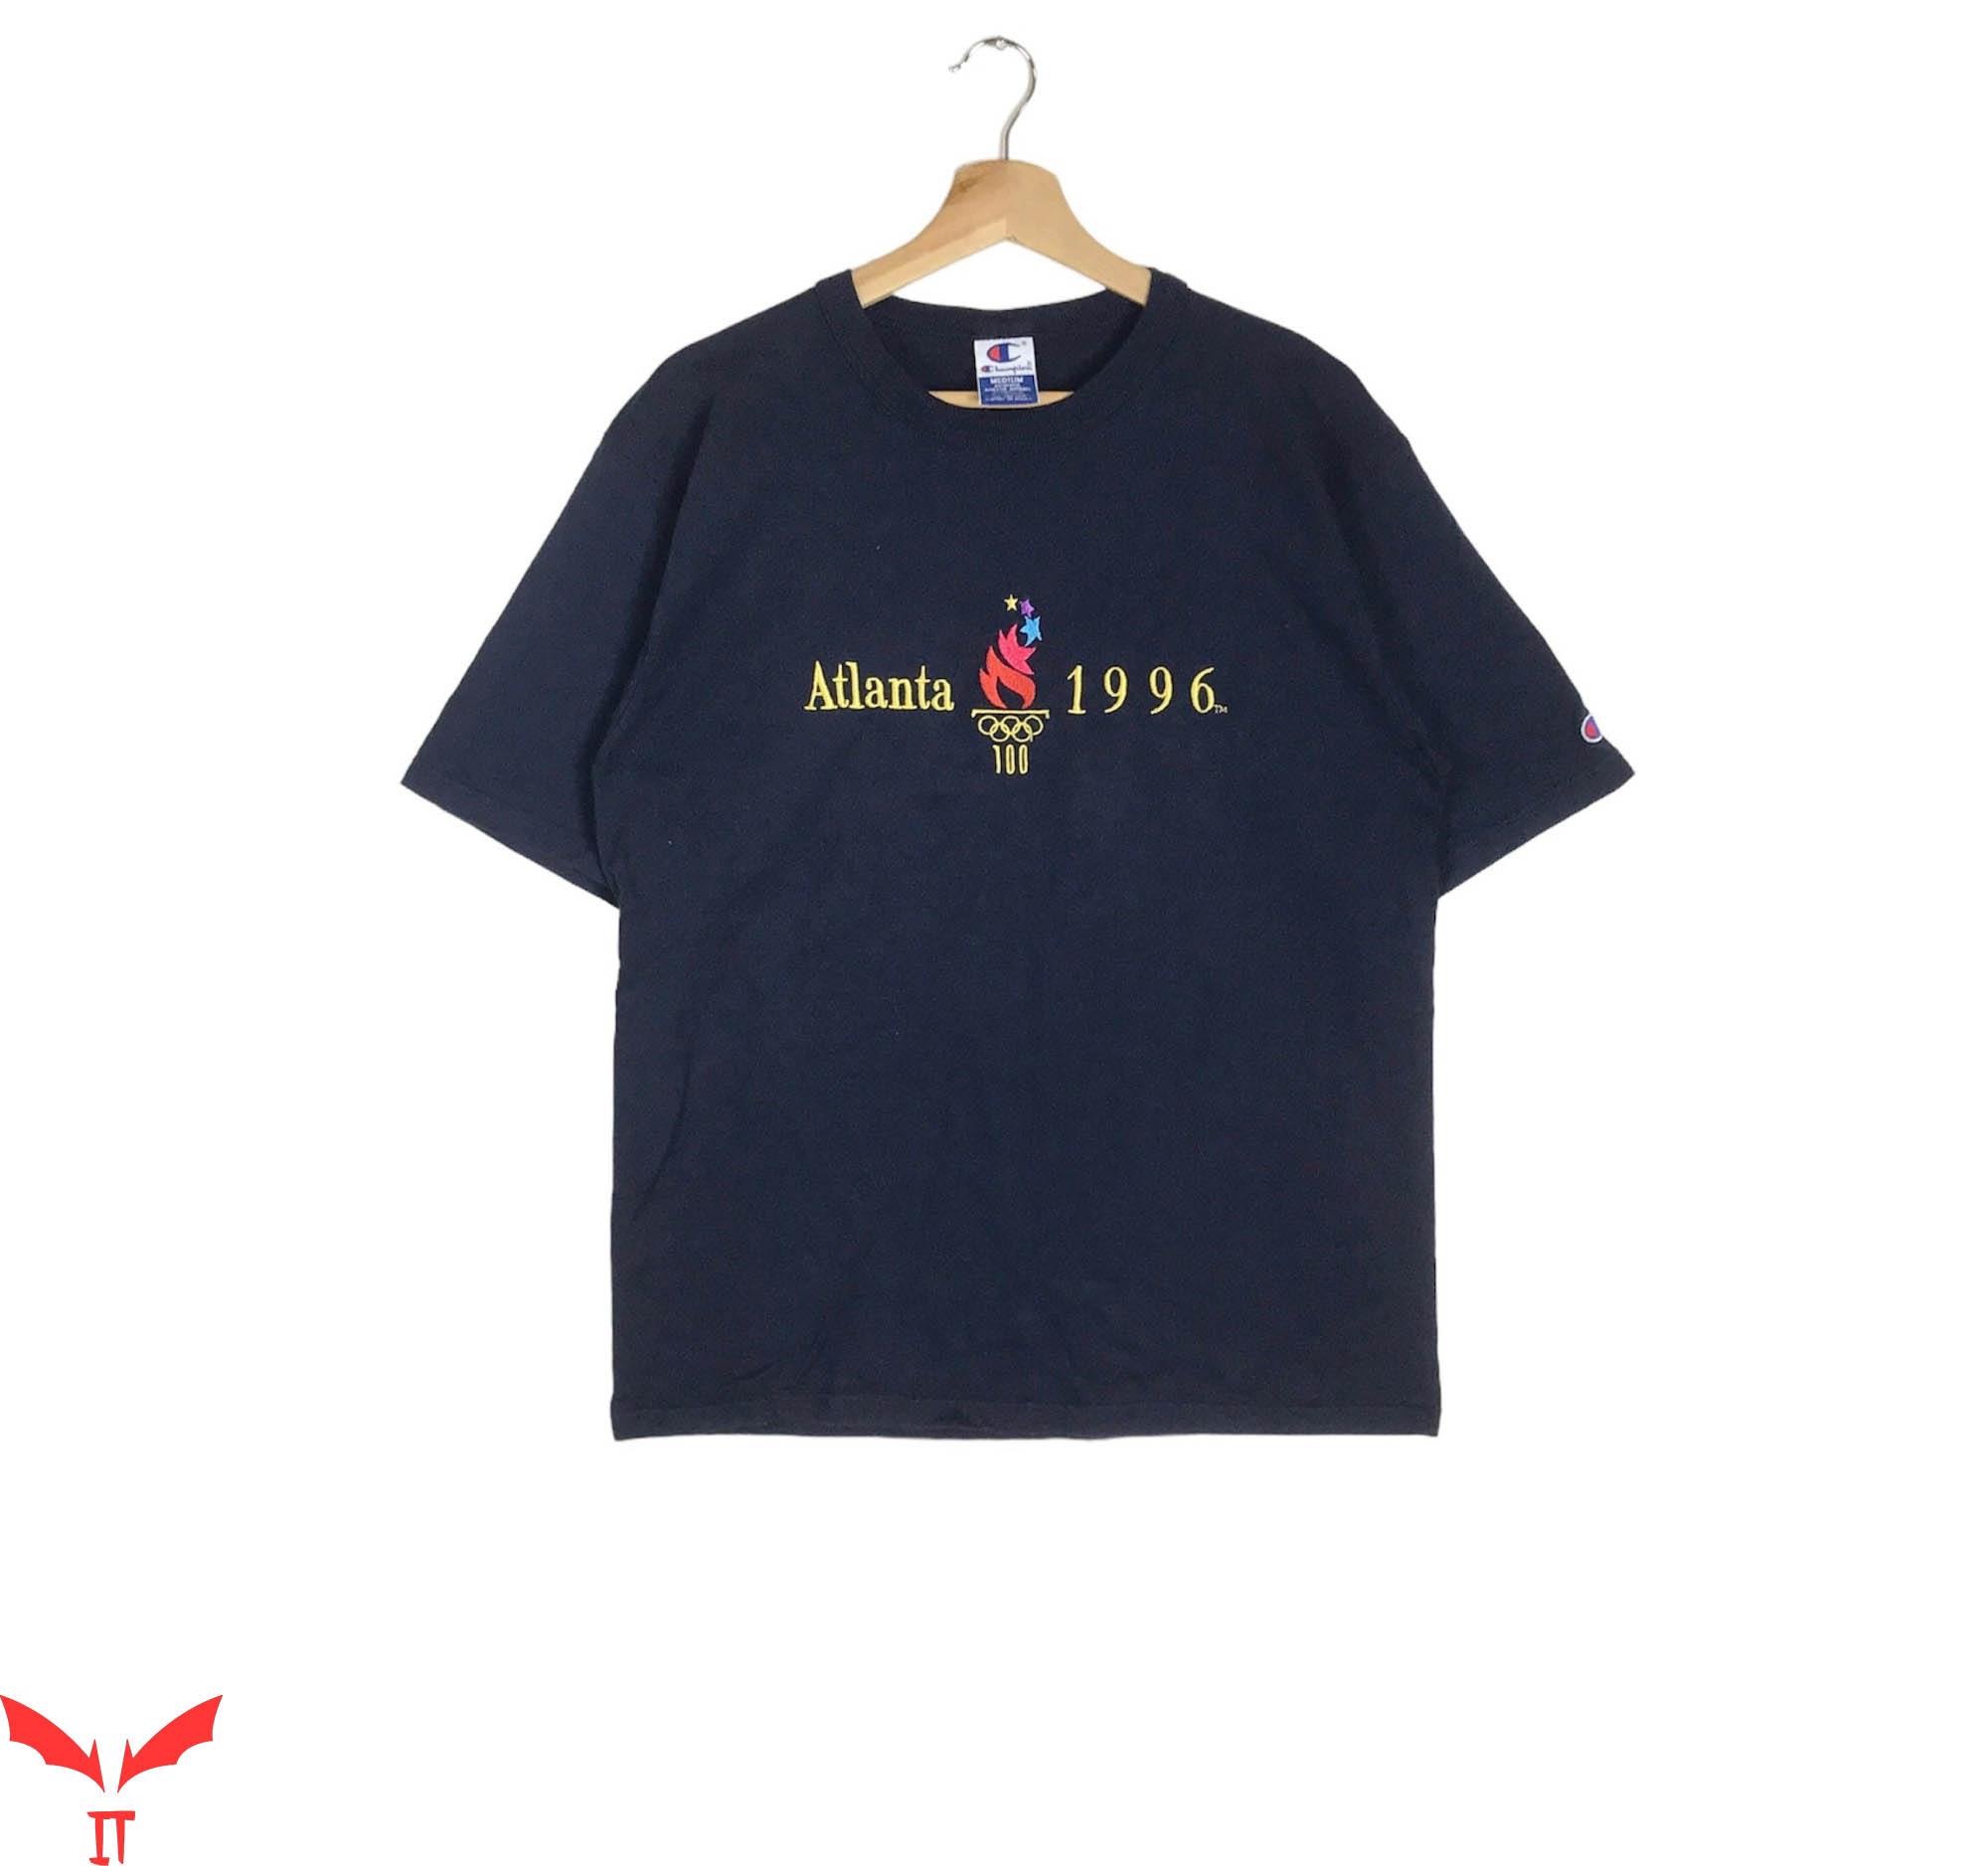 1996 Atlanta Olympics T-Shirt Vintage Champion USA Summer